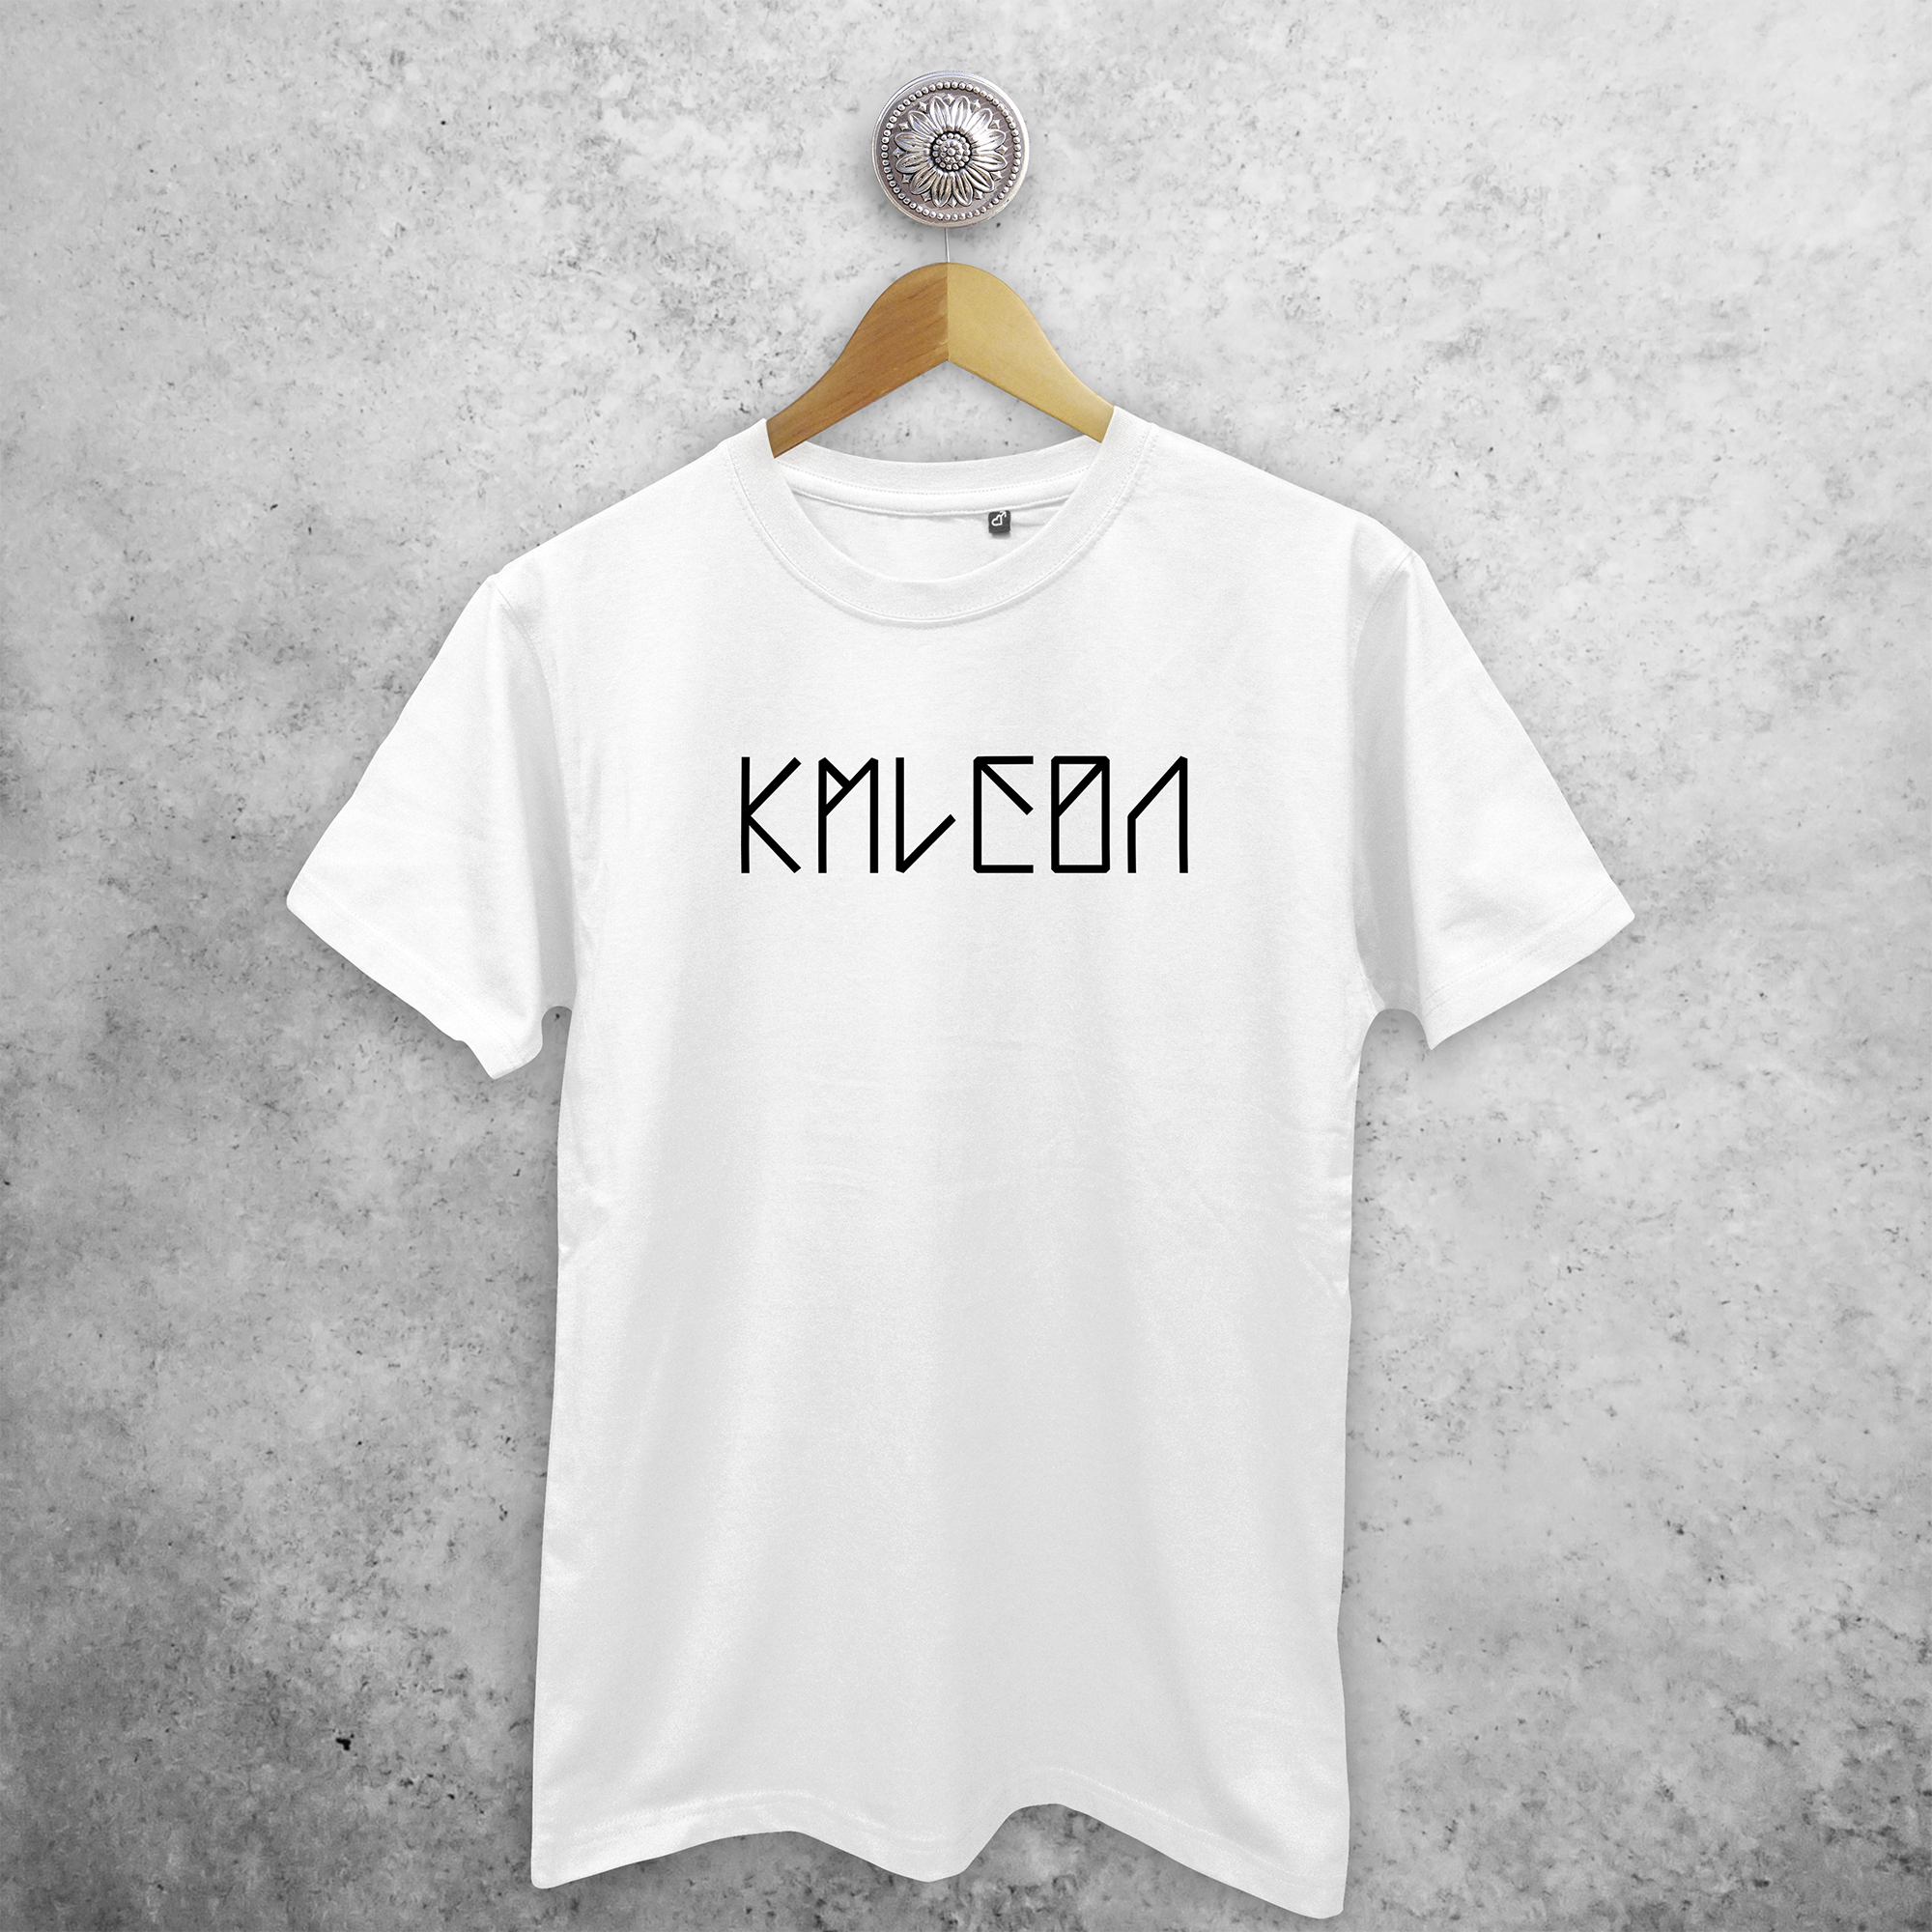 KMLeon adult shirt